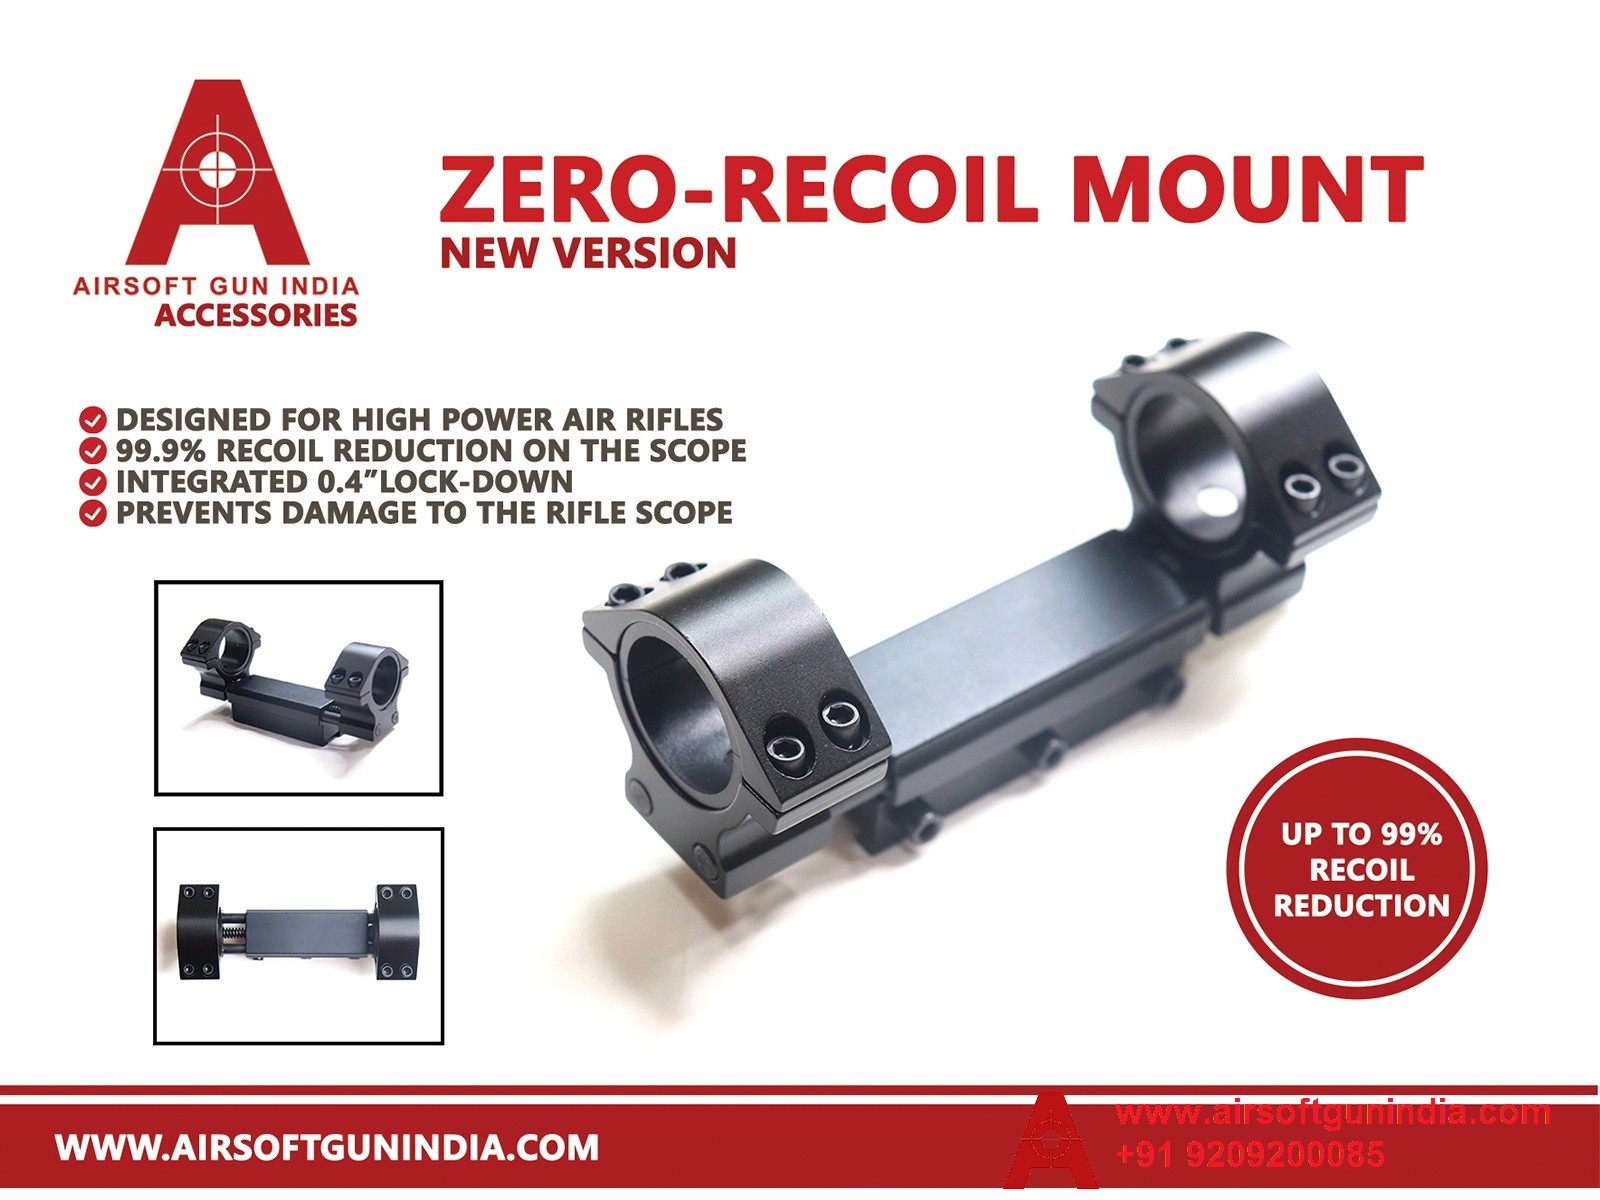 ZR Mount / Zero Recoil Mount By Airsoft Gun India